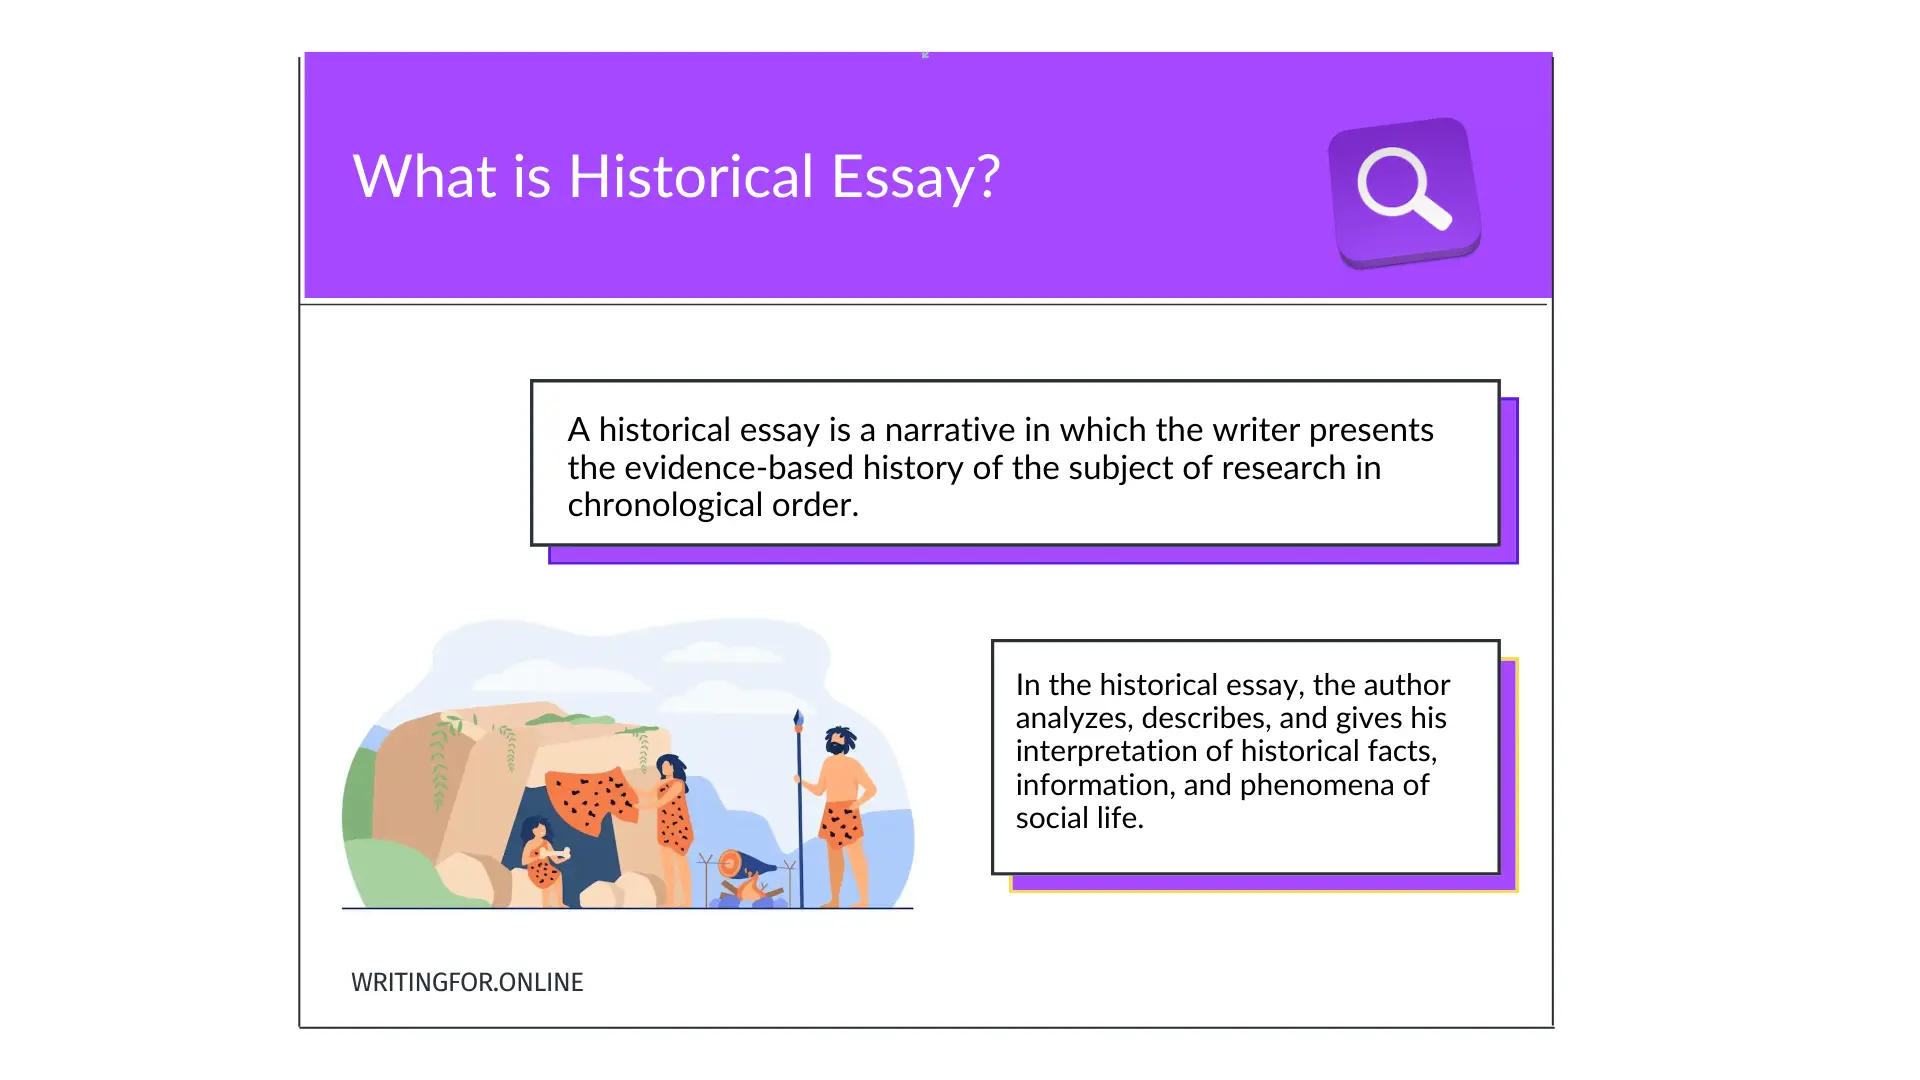 Historical essay definition, aim